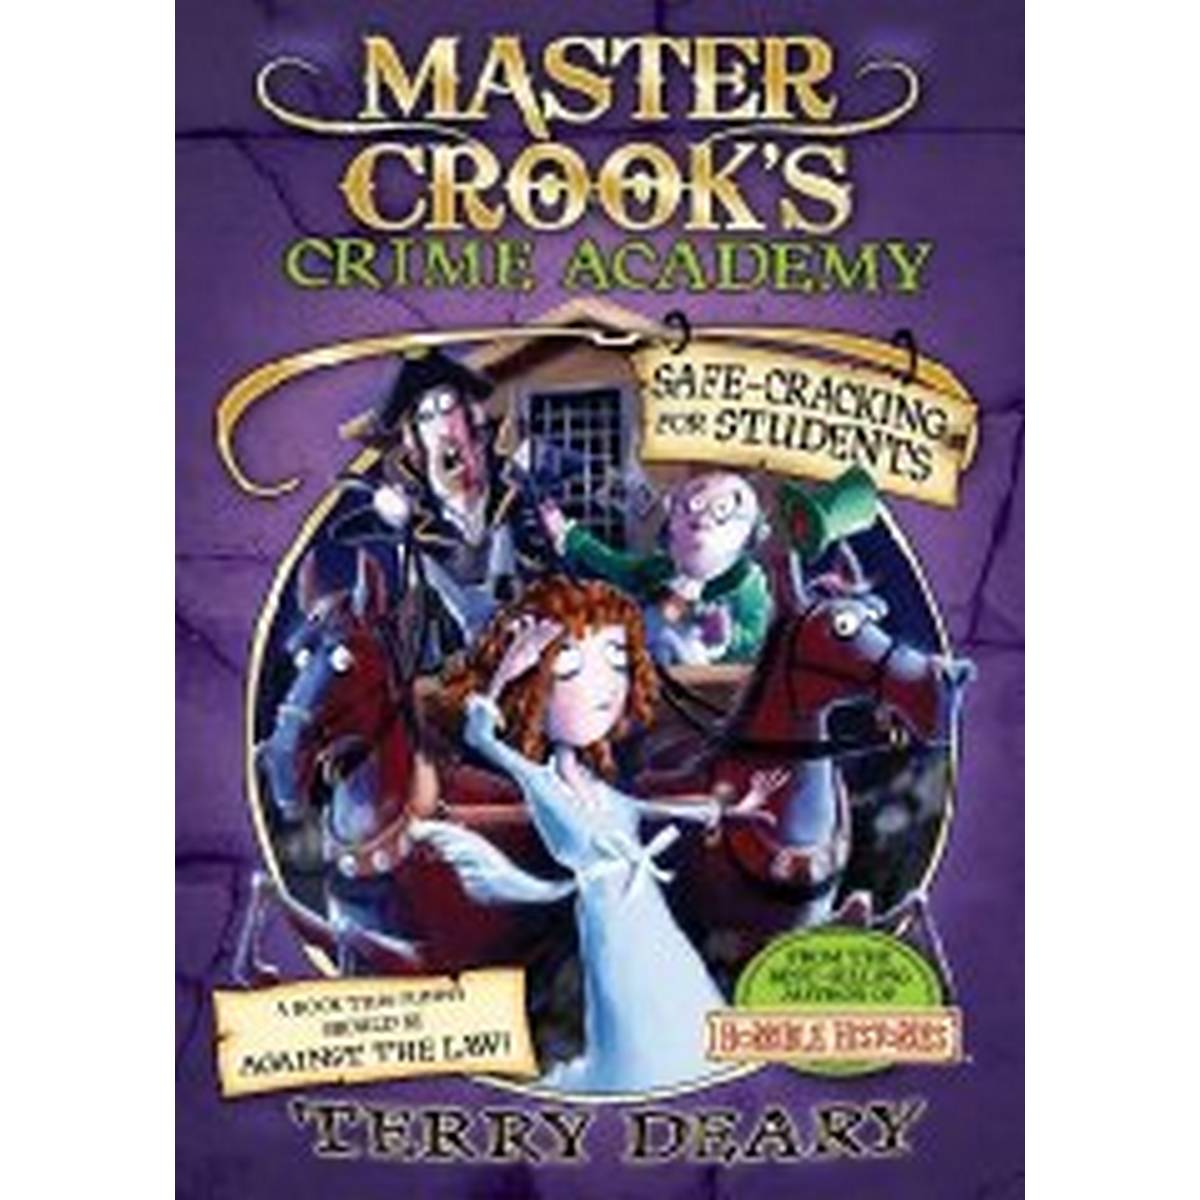 Safe-Cracking for Students (Master Crooks Crime Academy)